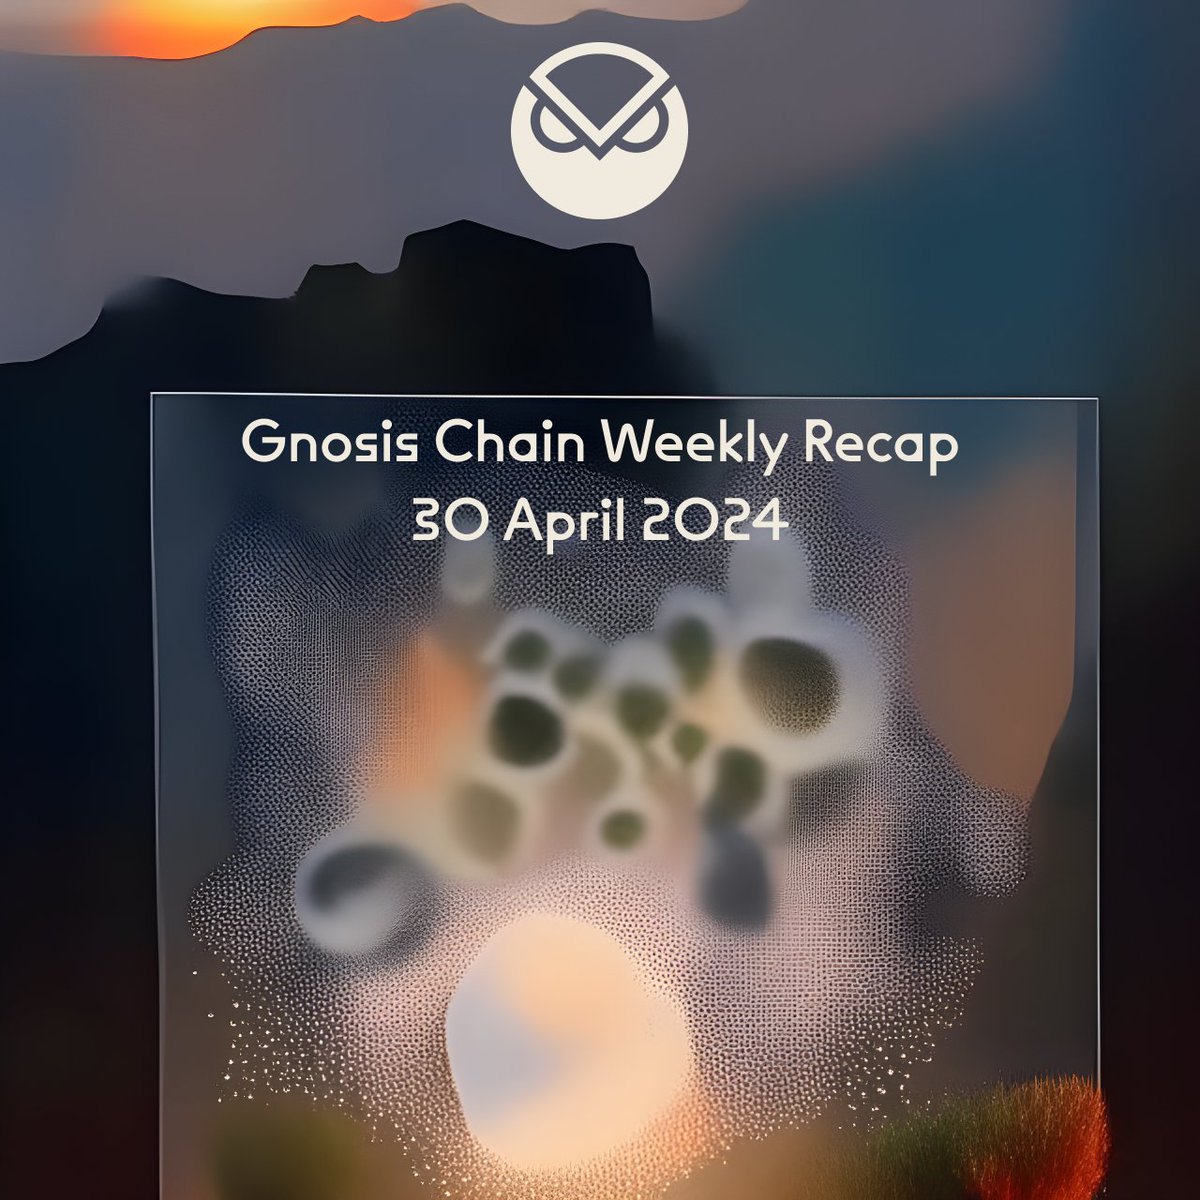 🦉Gnosis Chain Weekly · 30 April 2024 w/ updates from @GnosisDAO @dappcon_berlin @BerBlockWeek @hoprnet @sparkdotfi @MakerDAO @gnosispay @CirclesUBI @aboutcircles @blockscoutcom @NethermindEth @azuroprotocol @Kleros_io @bootnodedev @ETHGlobal gnosischain.ghost.io/gnosis-chain-w…